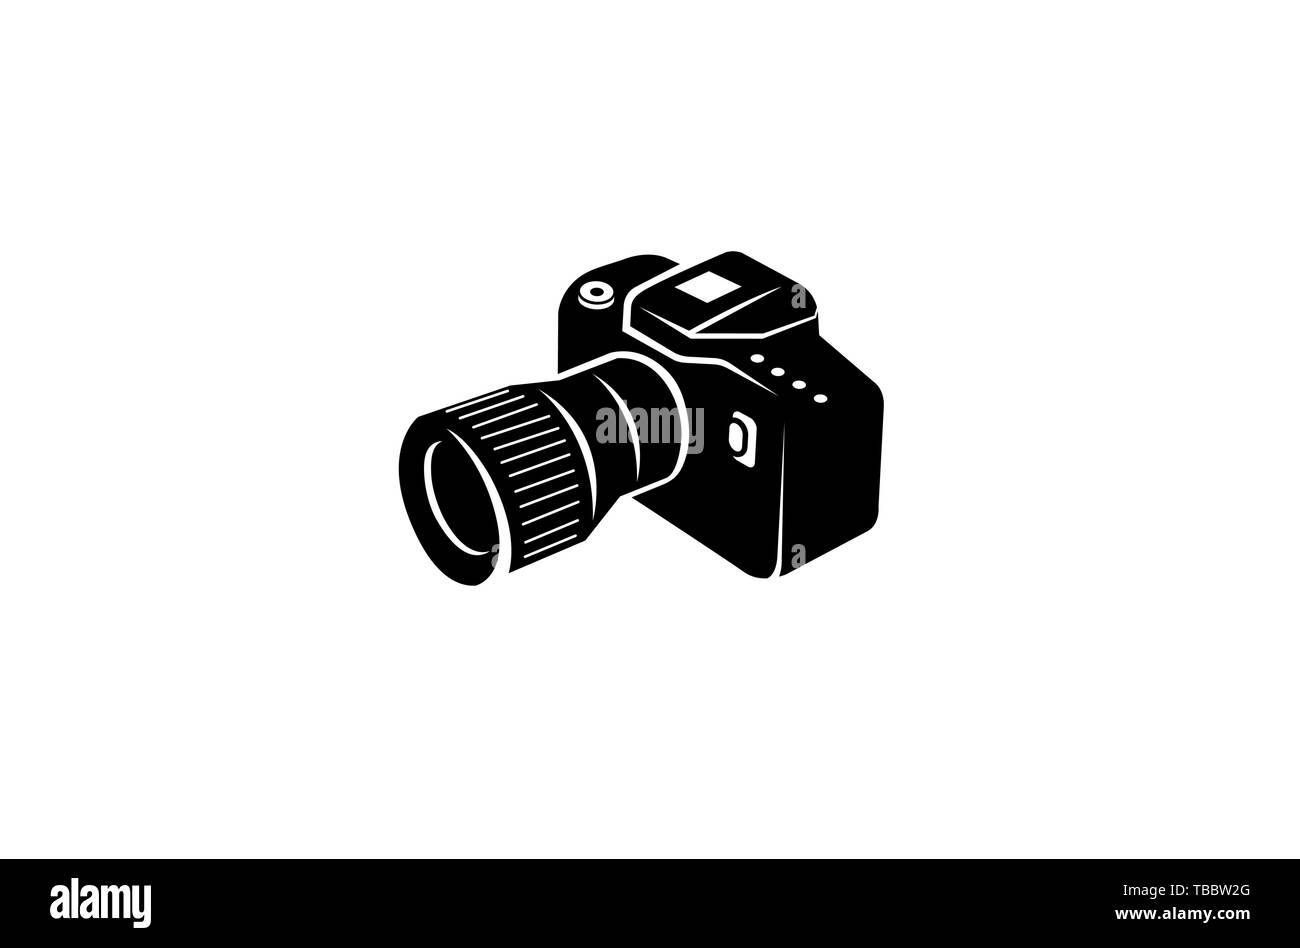 dslr camera logo